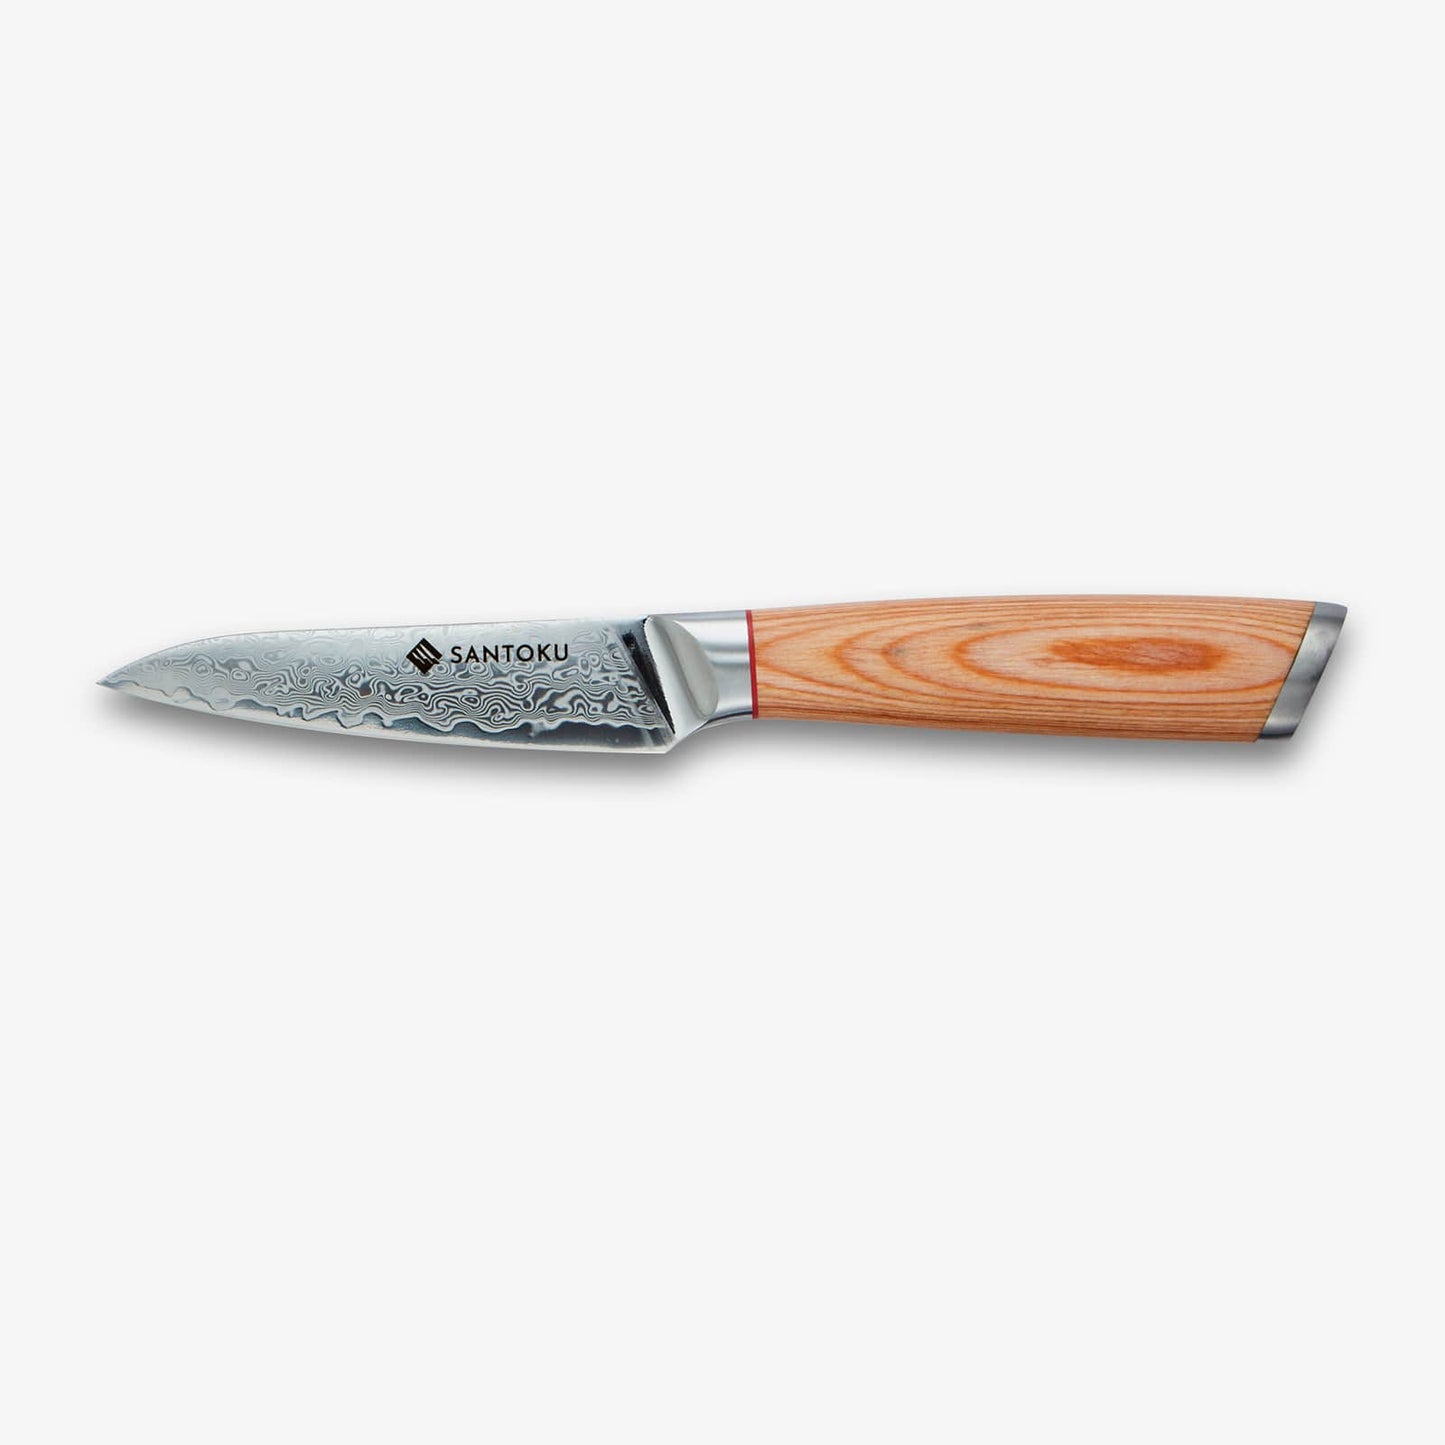 Haruta (はる た) 4 tommers paring kniv